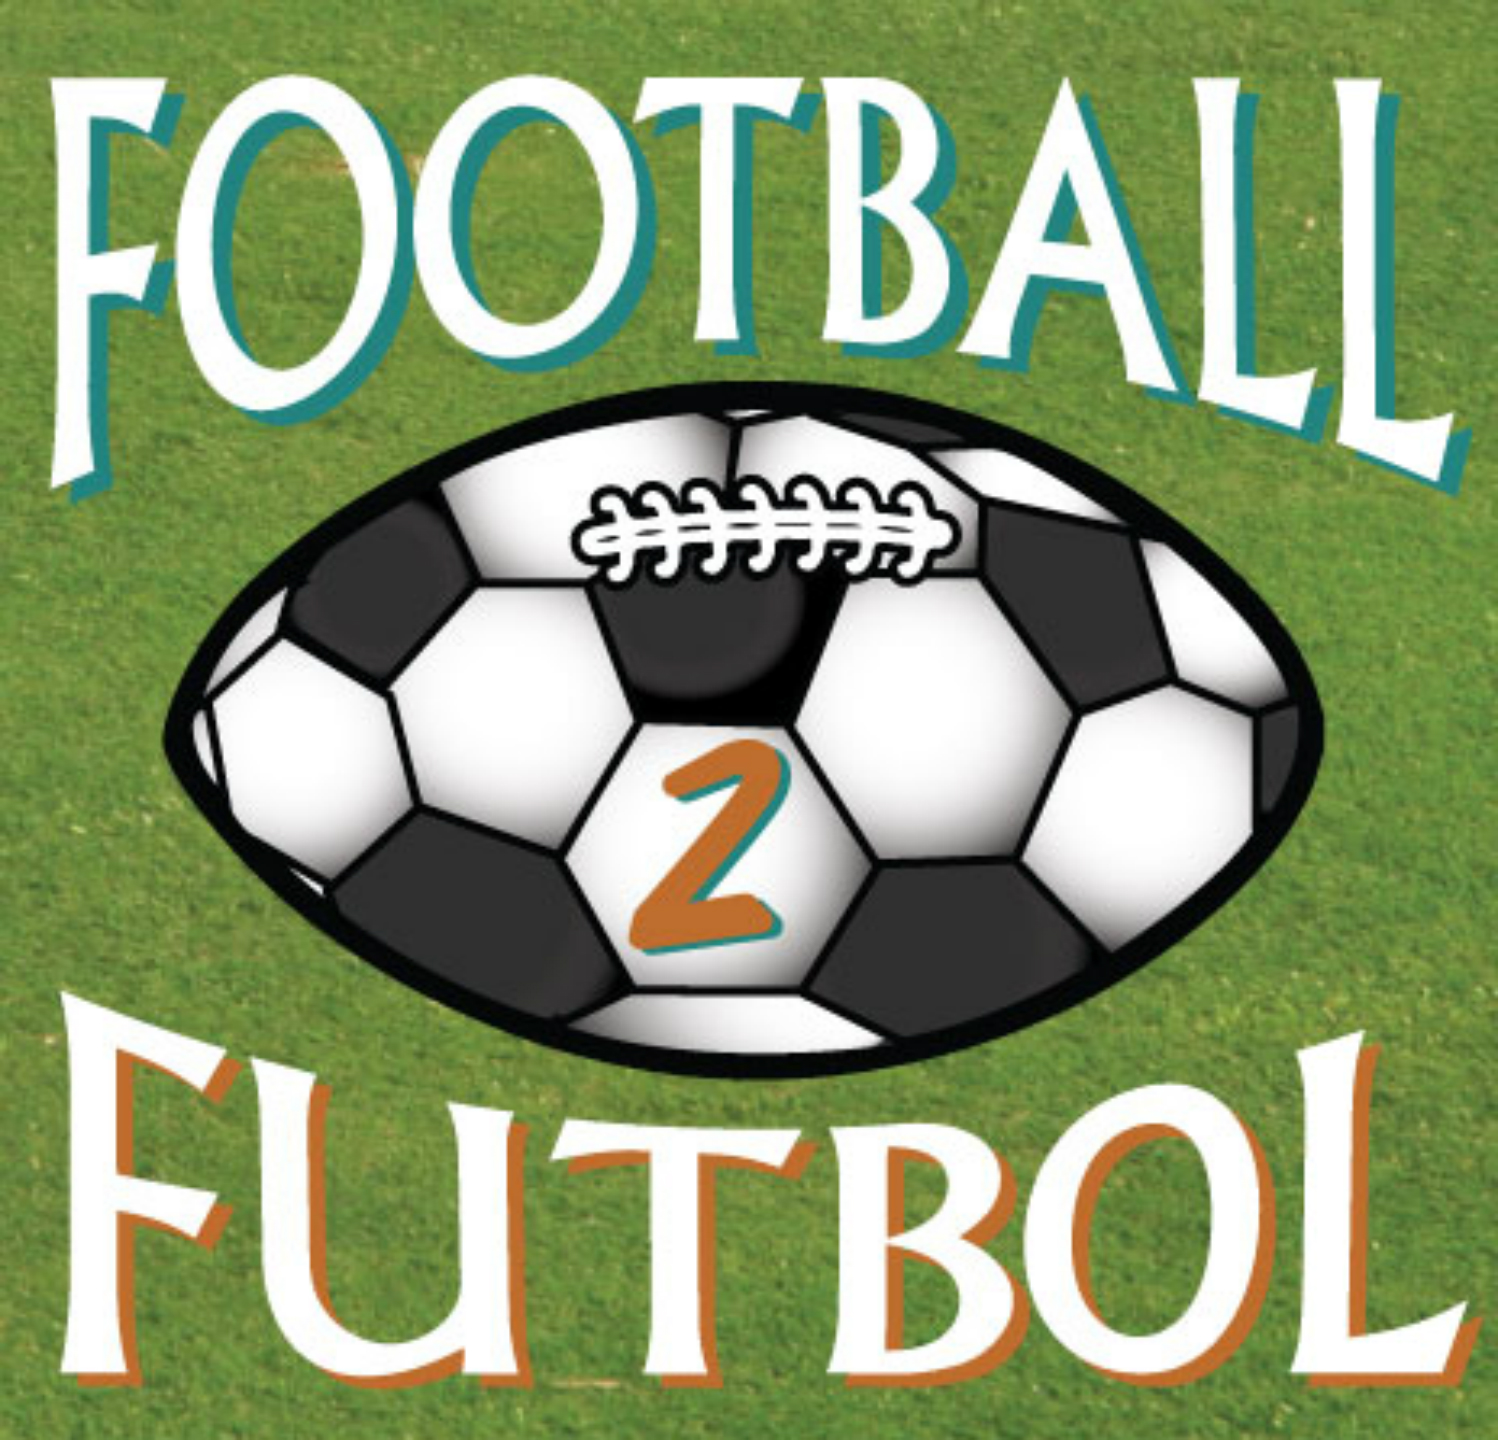 Football 2 Futbol:  NFL Week 4 Preview, Ravens vs. Steelers TNF Talk, & College Football Week 5 Preview 